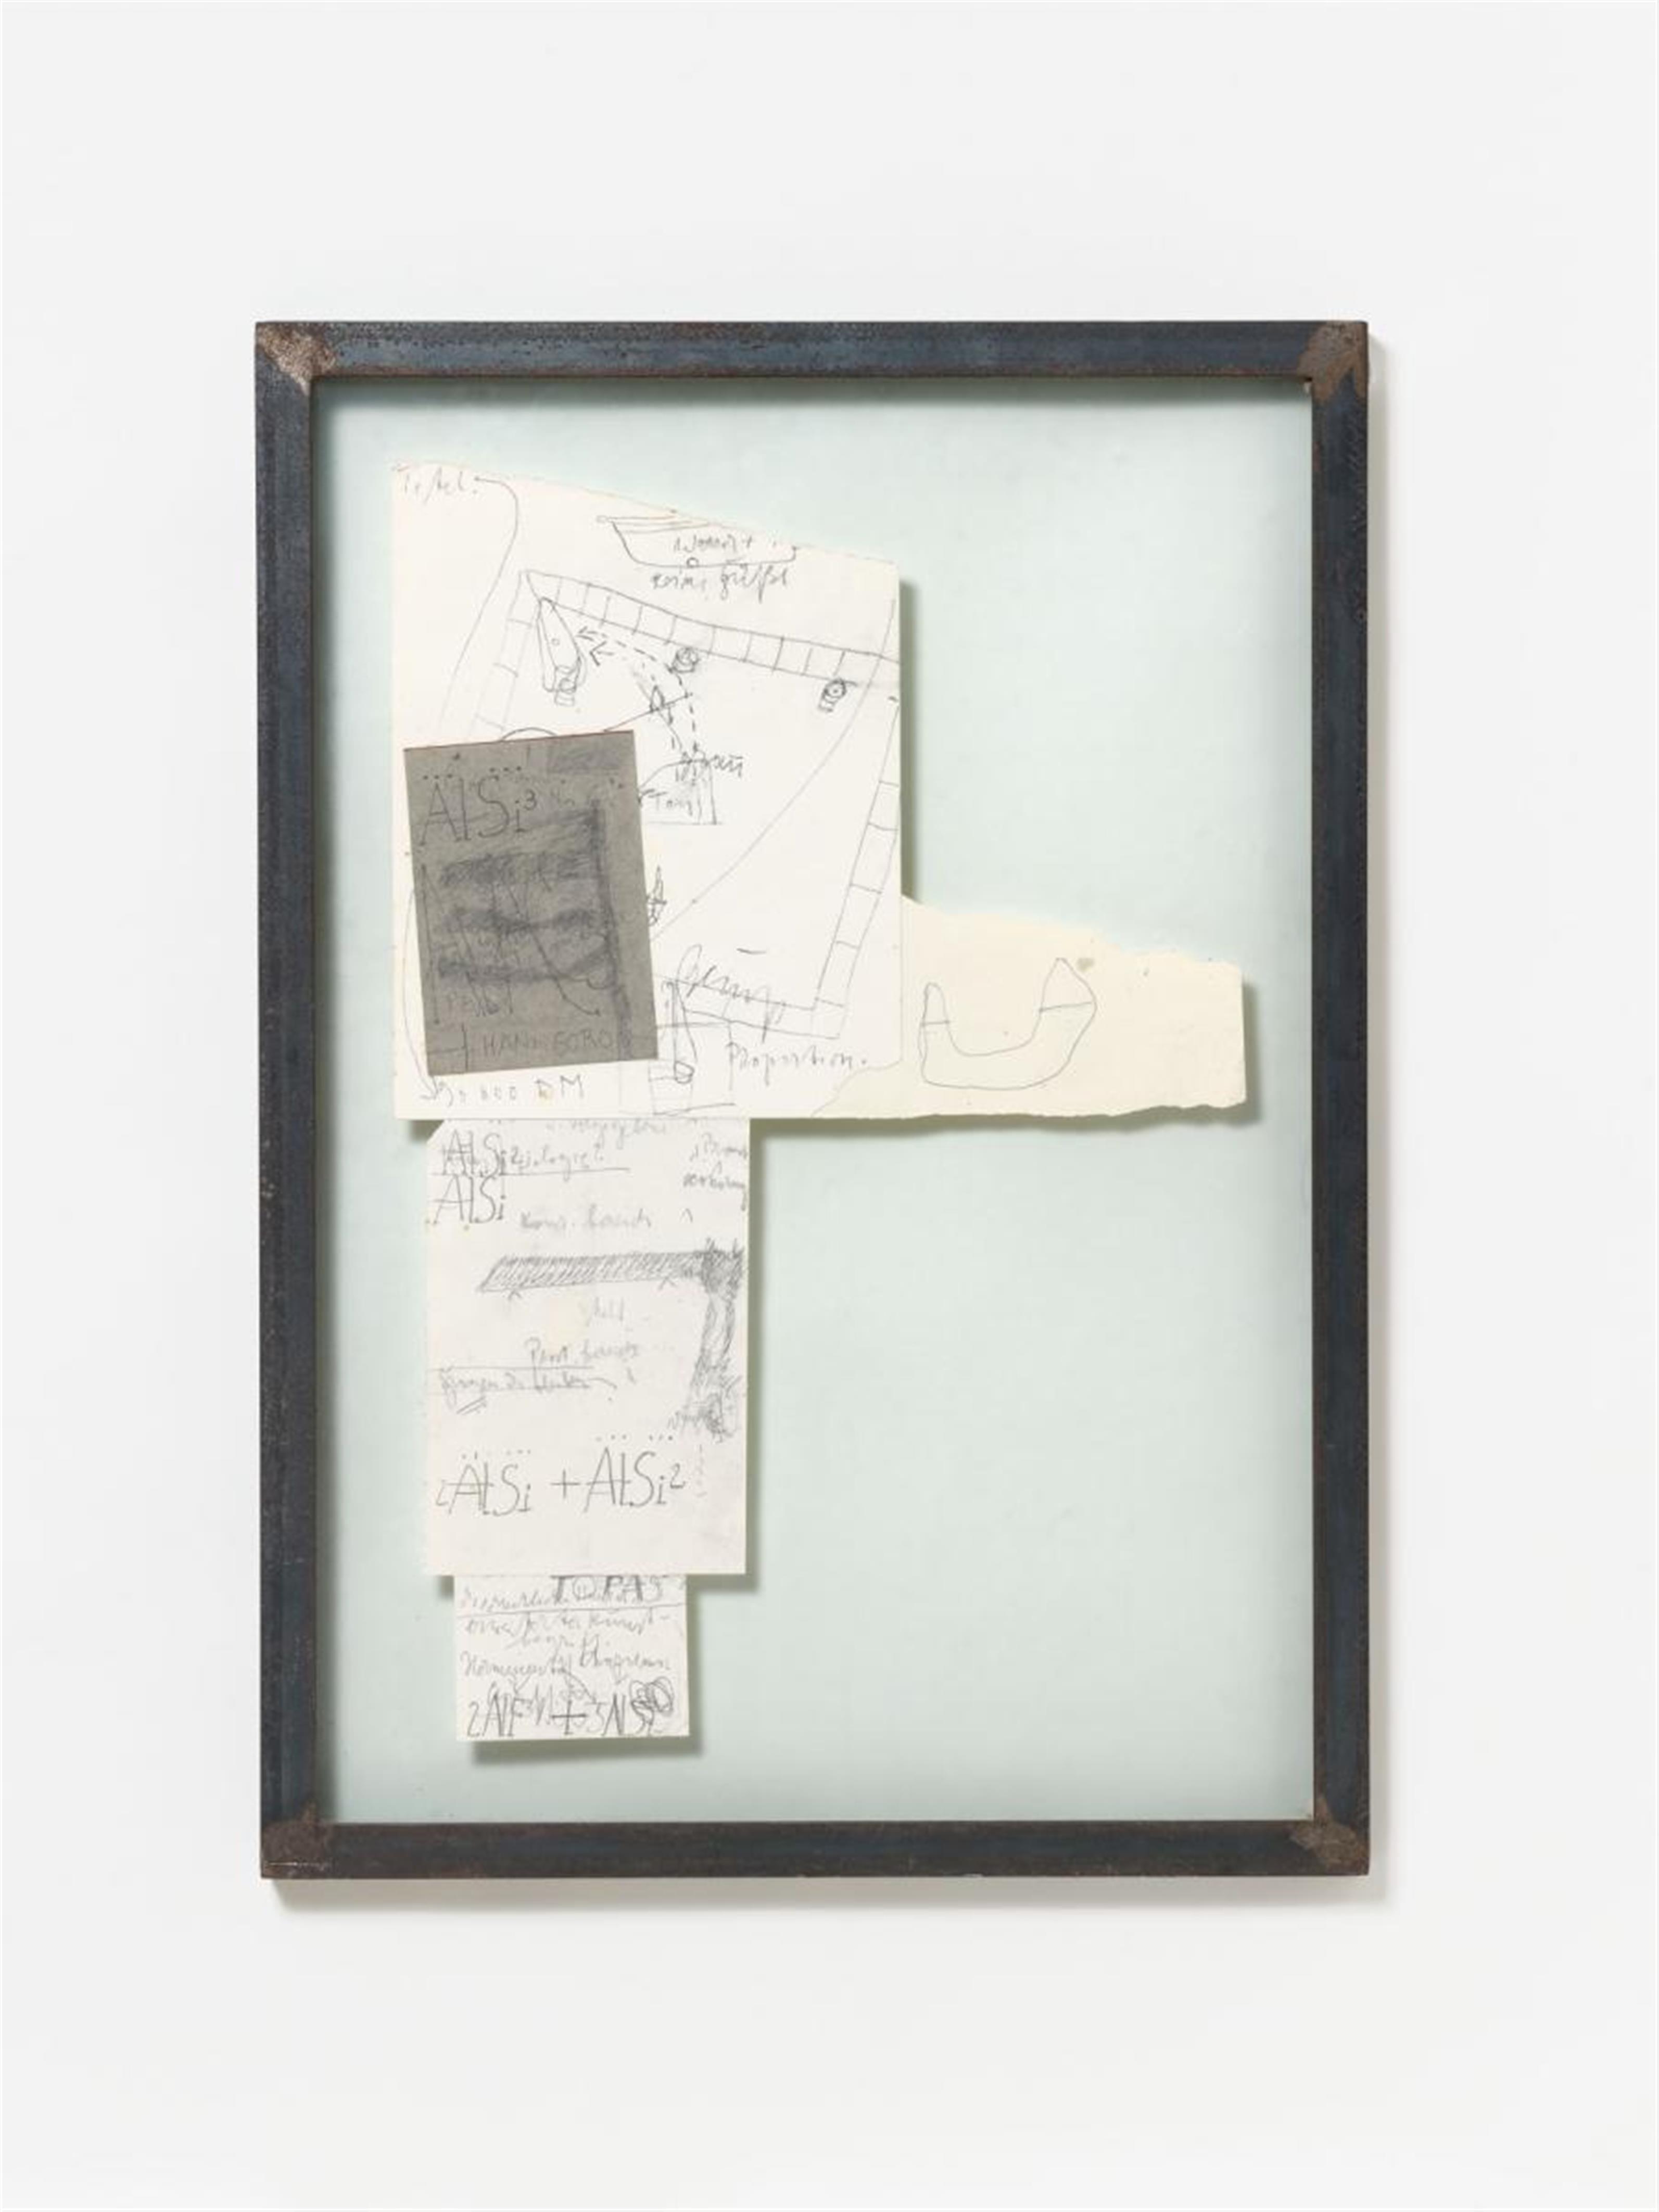 Joseph Beuys - 90.000 DM - image-1